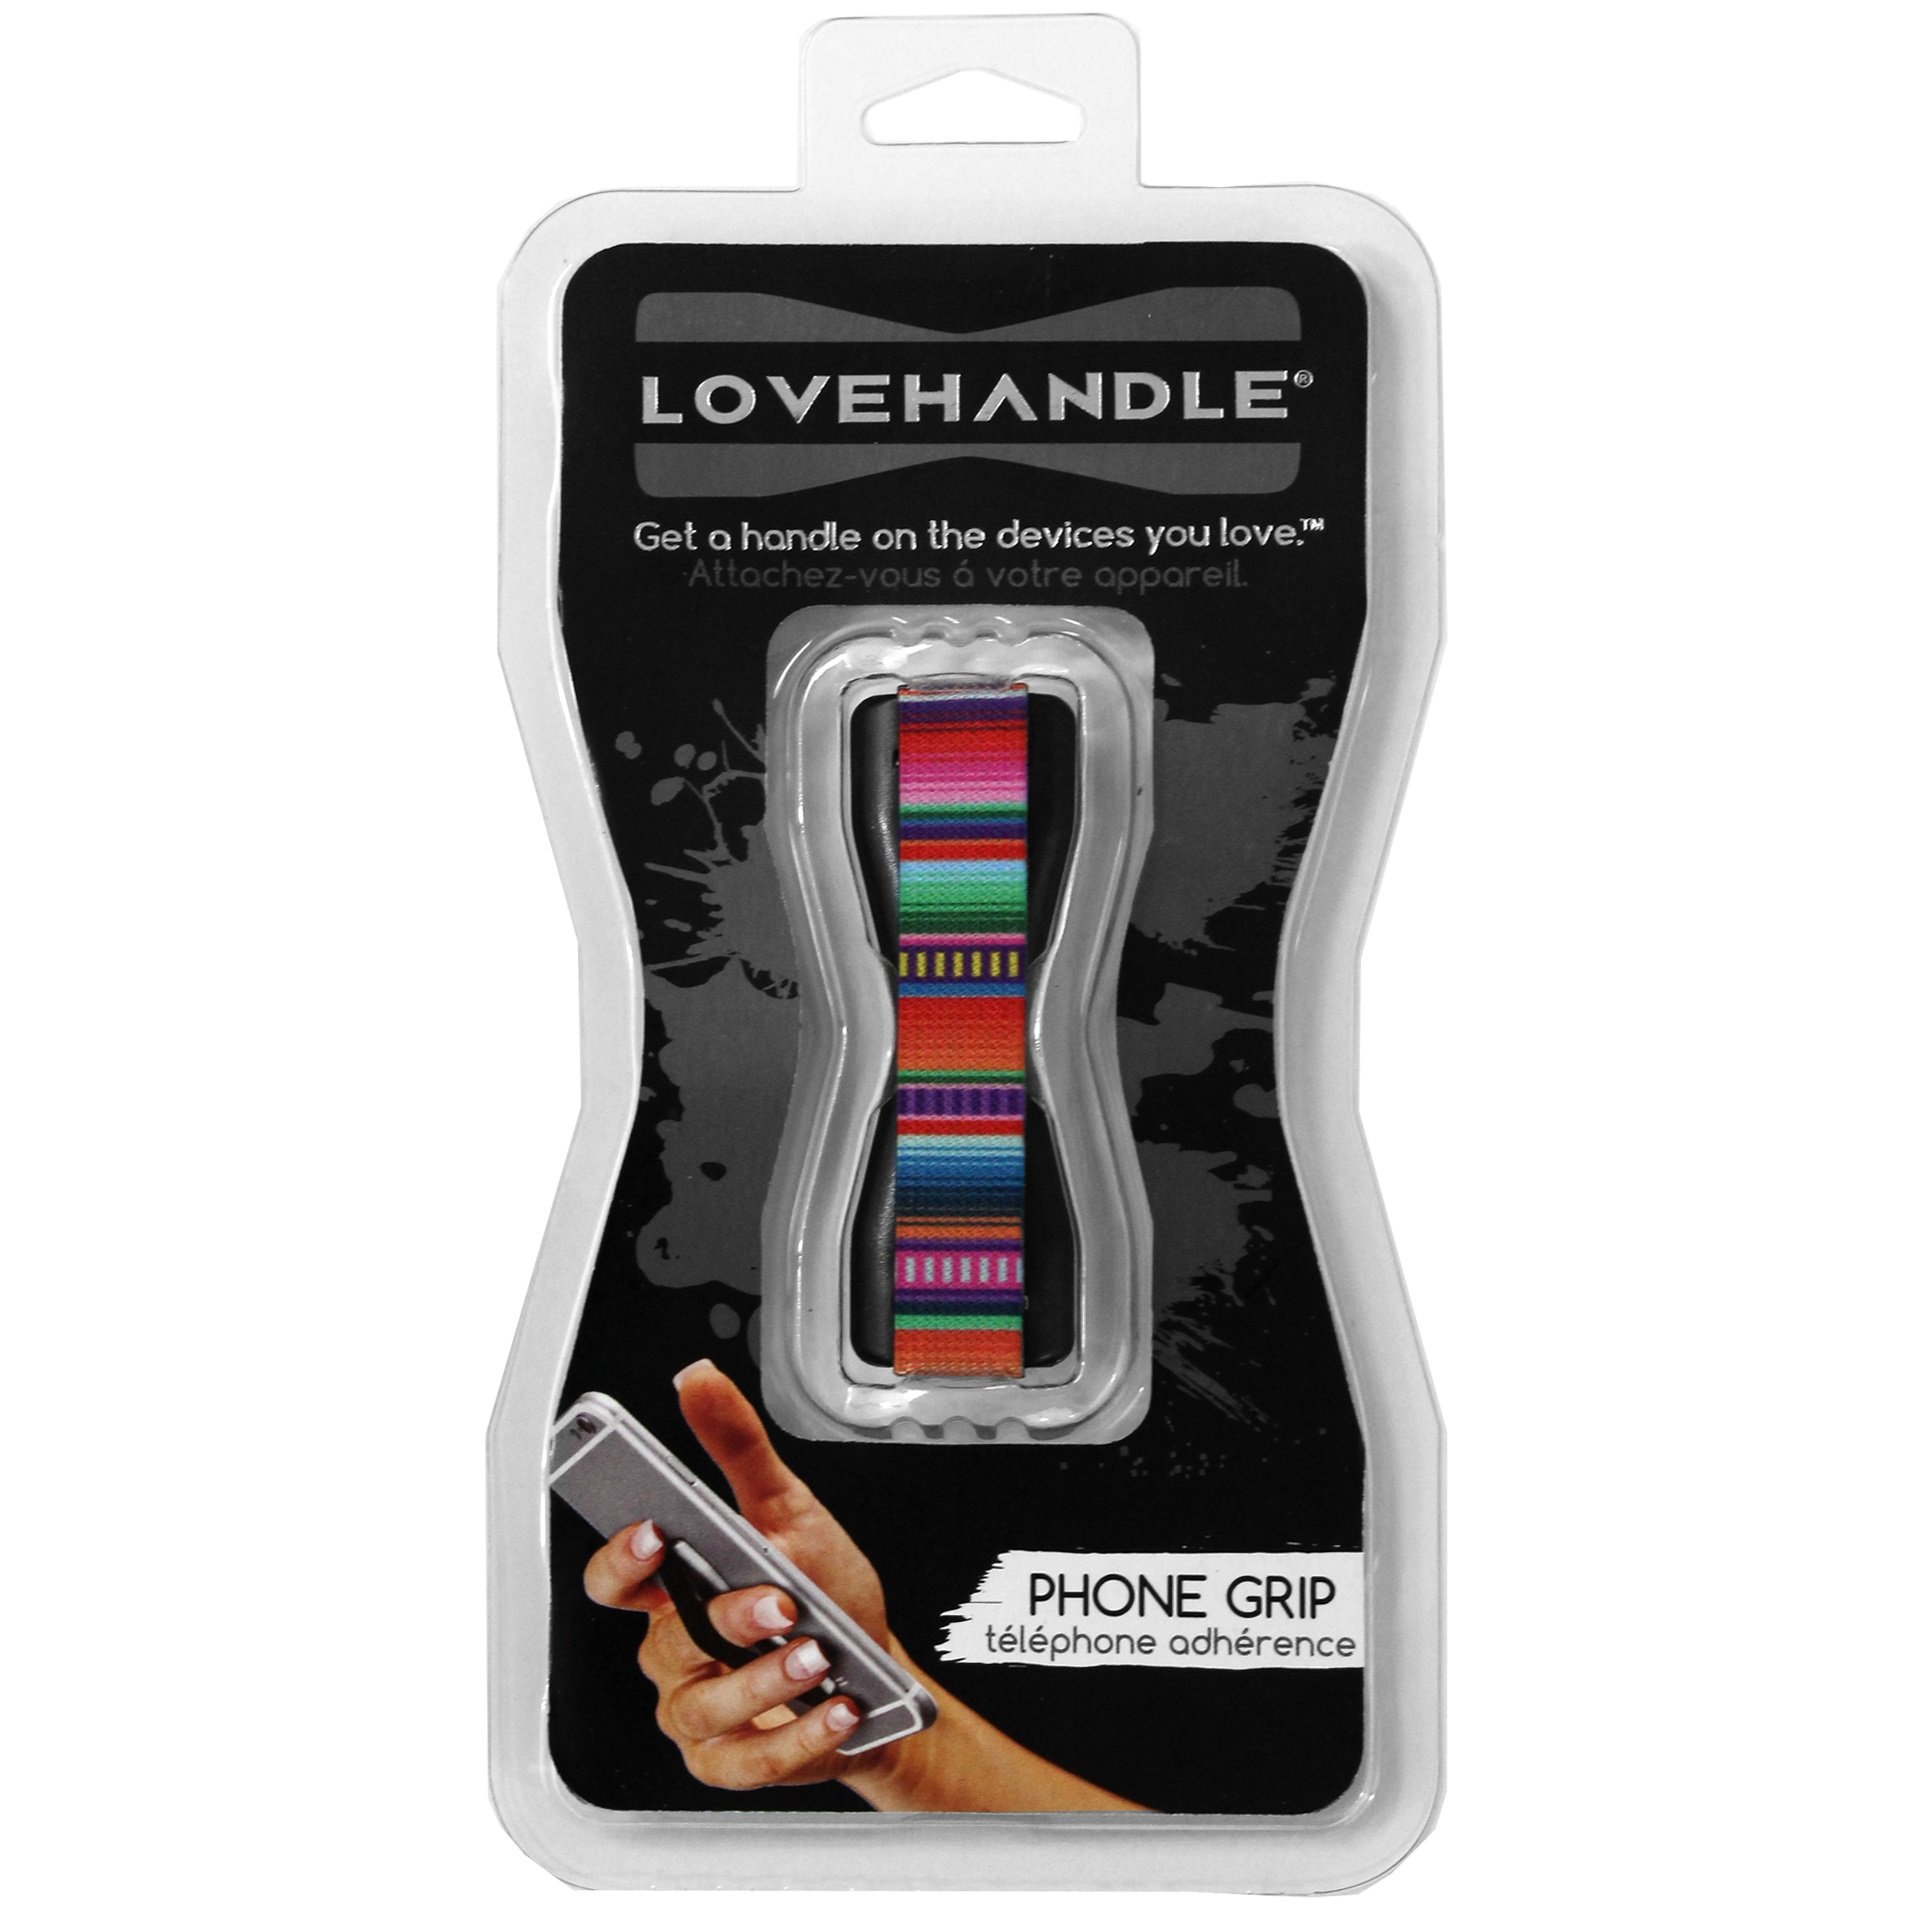 love handle phone grip review